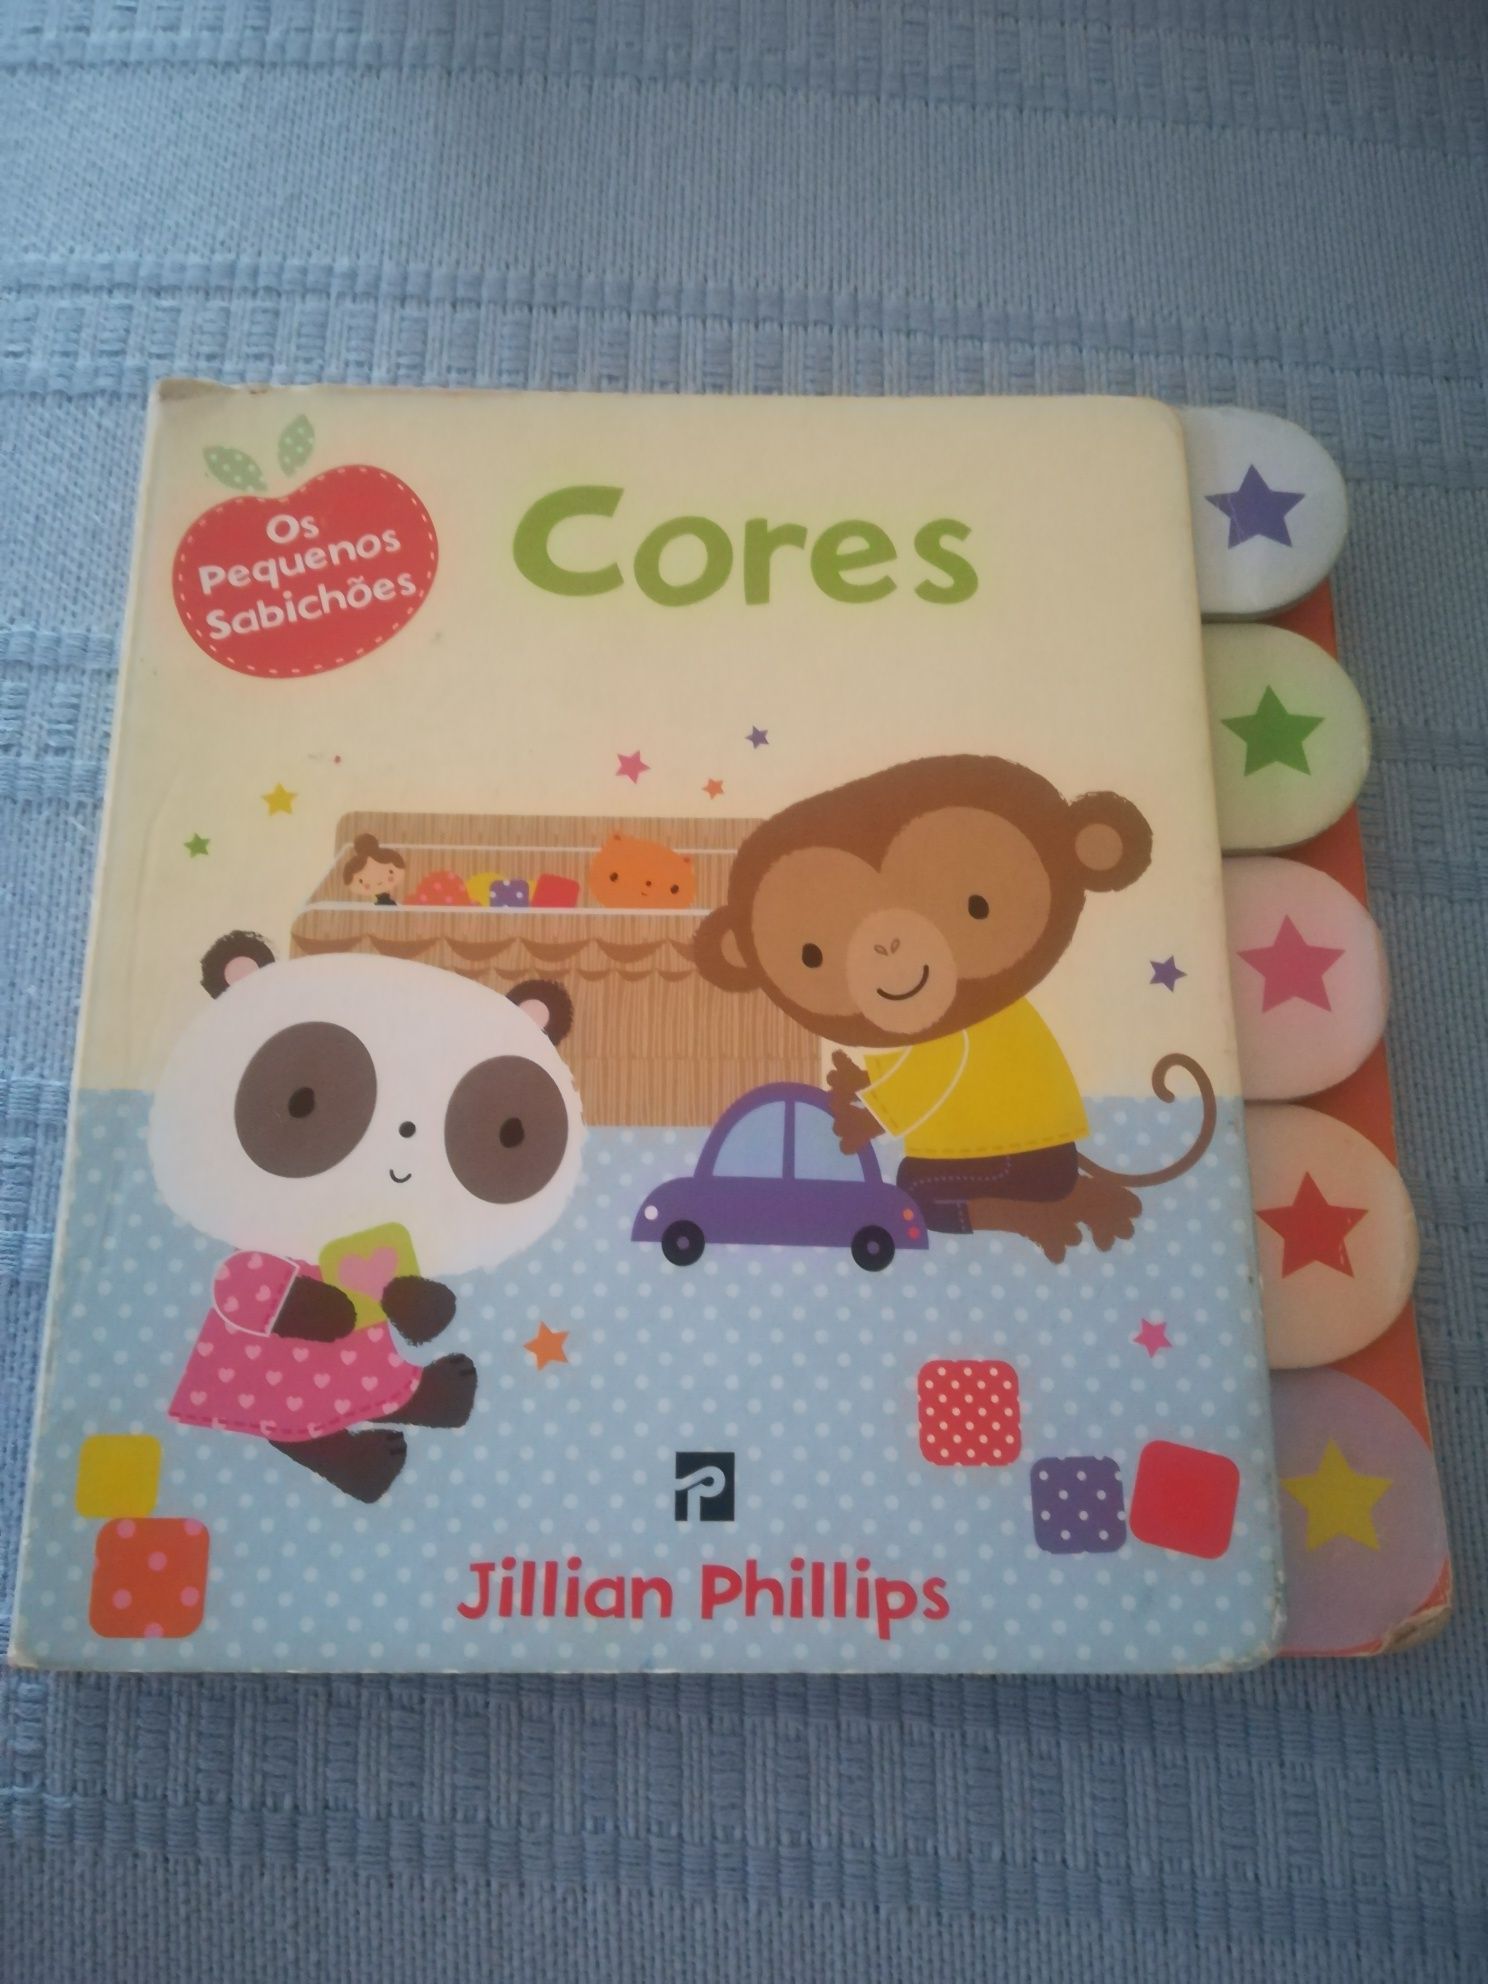 Livro "Os pequenos sabichões: Cores" de Jillian Phillips